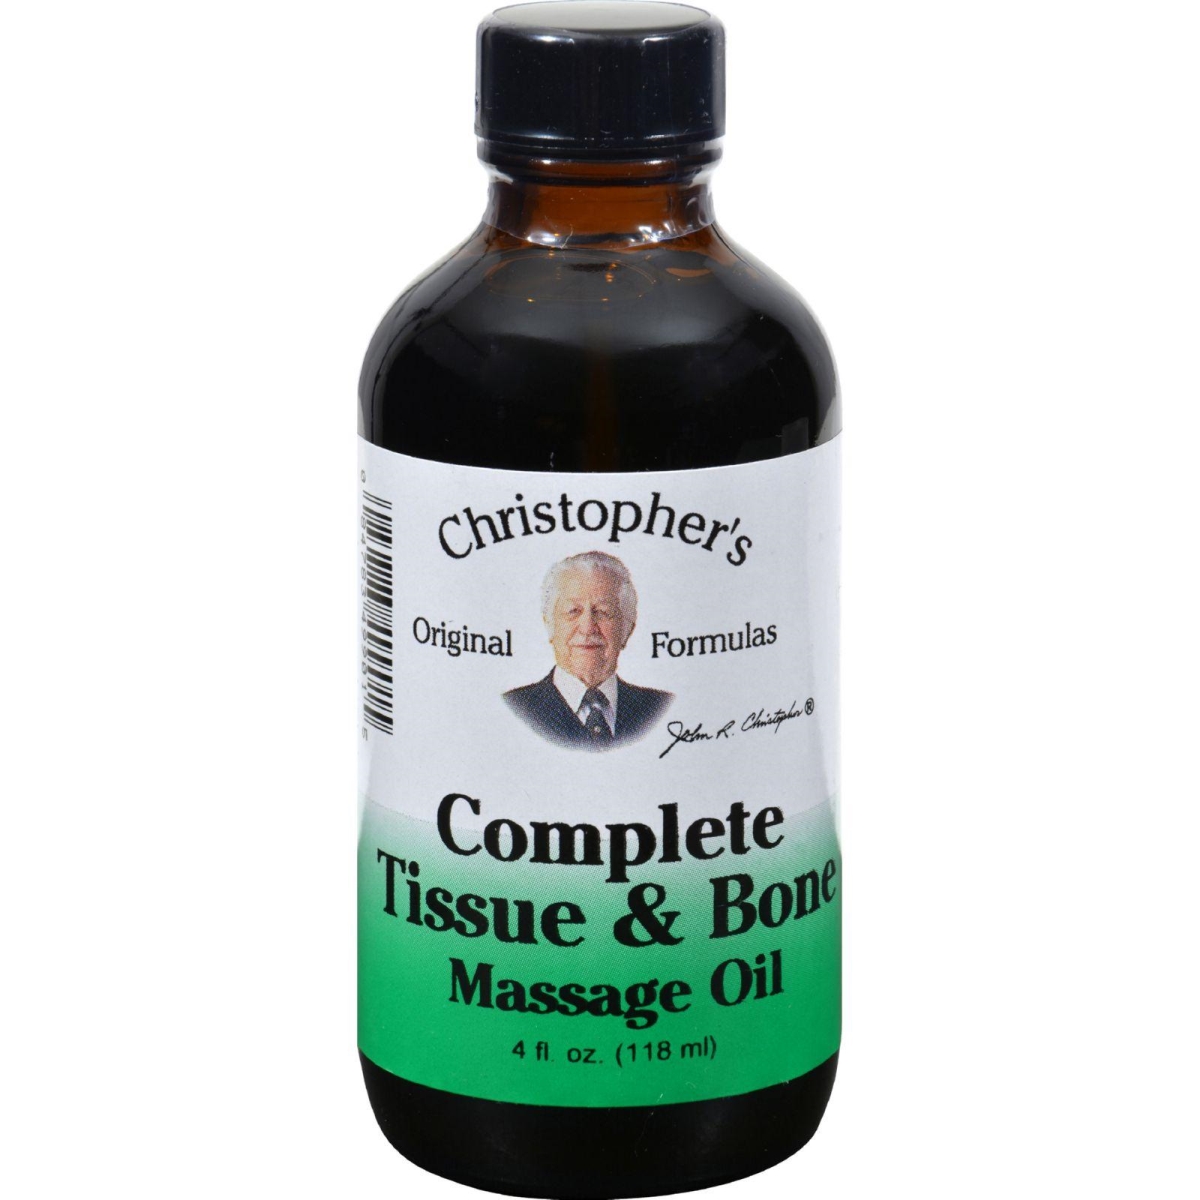 Hg0758052 4 Oz Complete Tissue & Bone Massage Oil